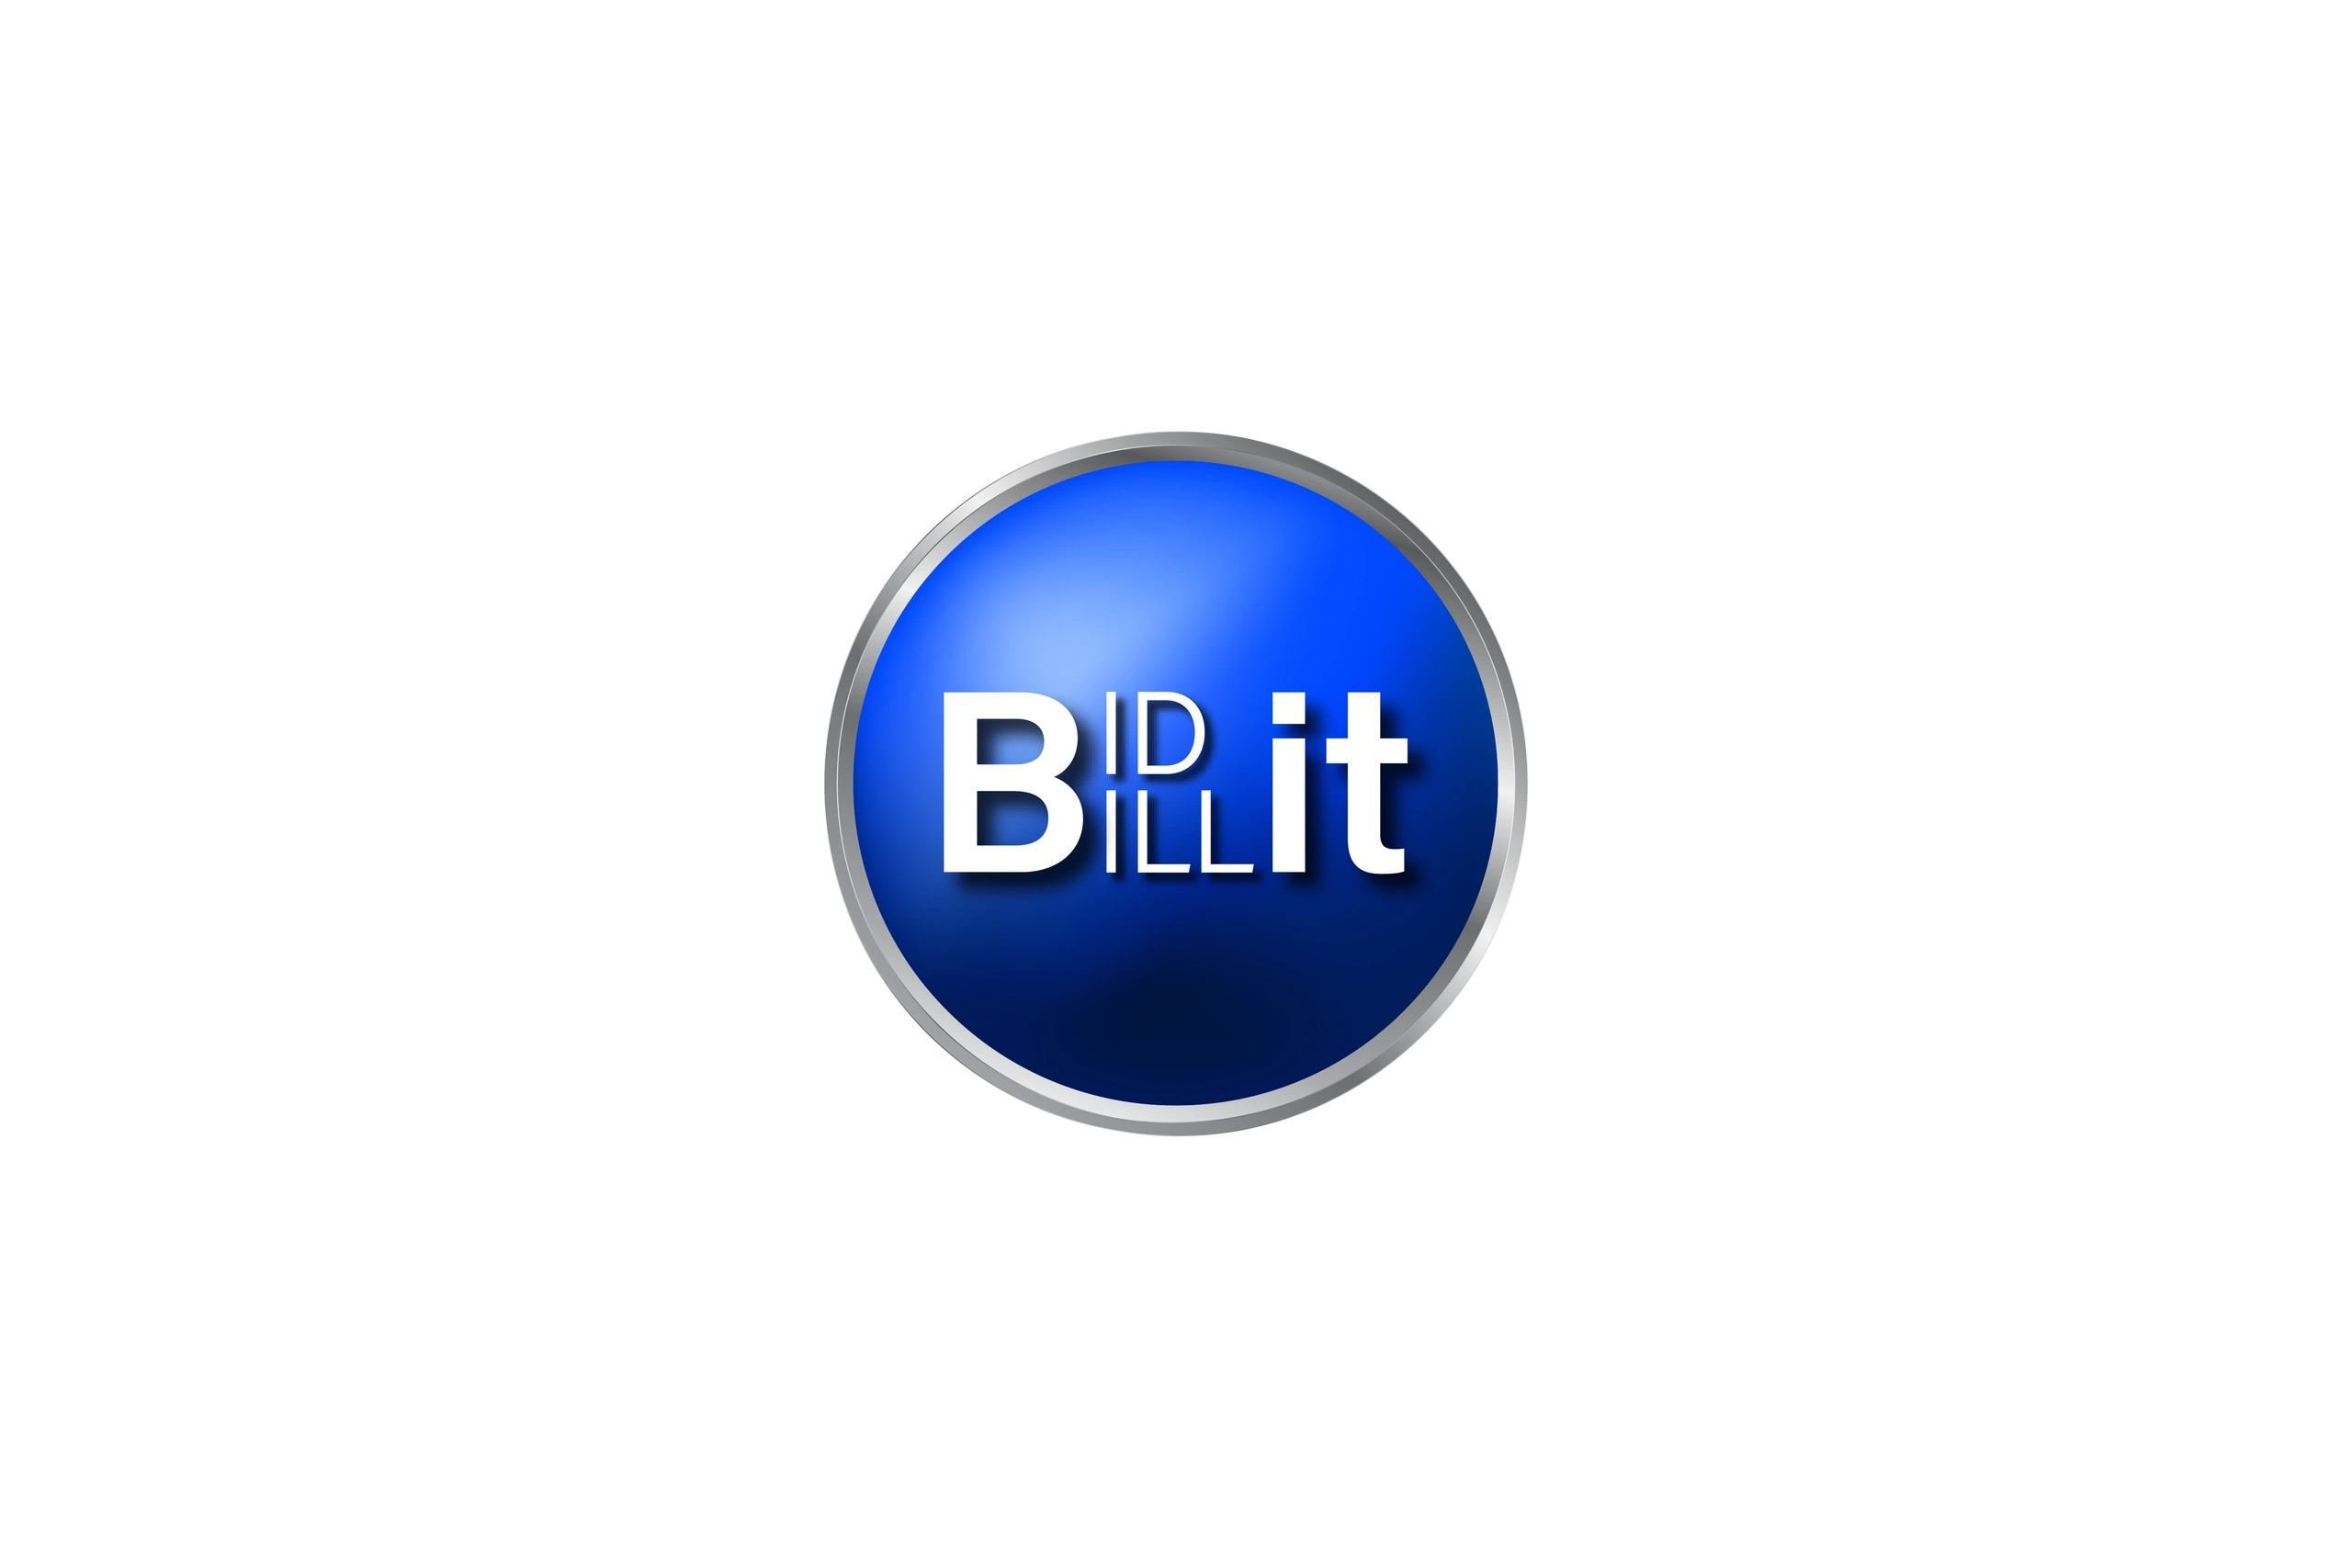 BIDitBILLit services software 